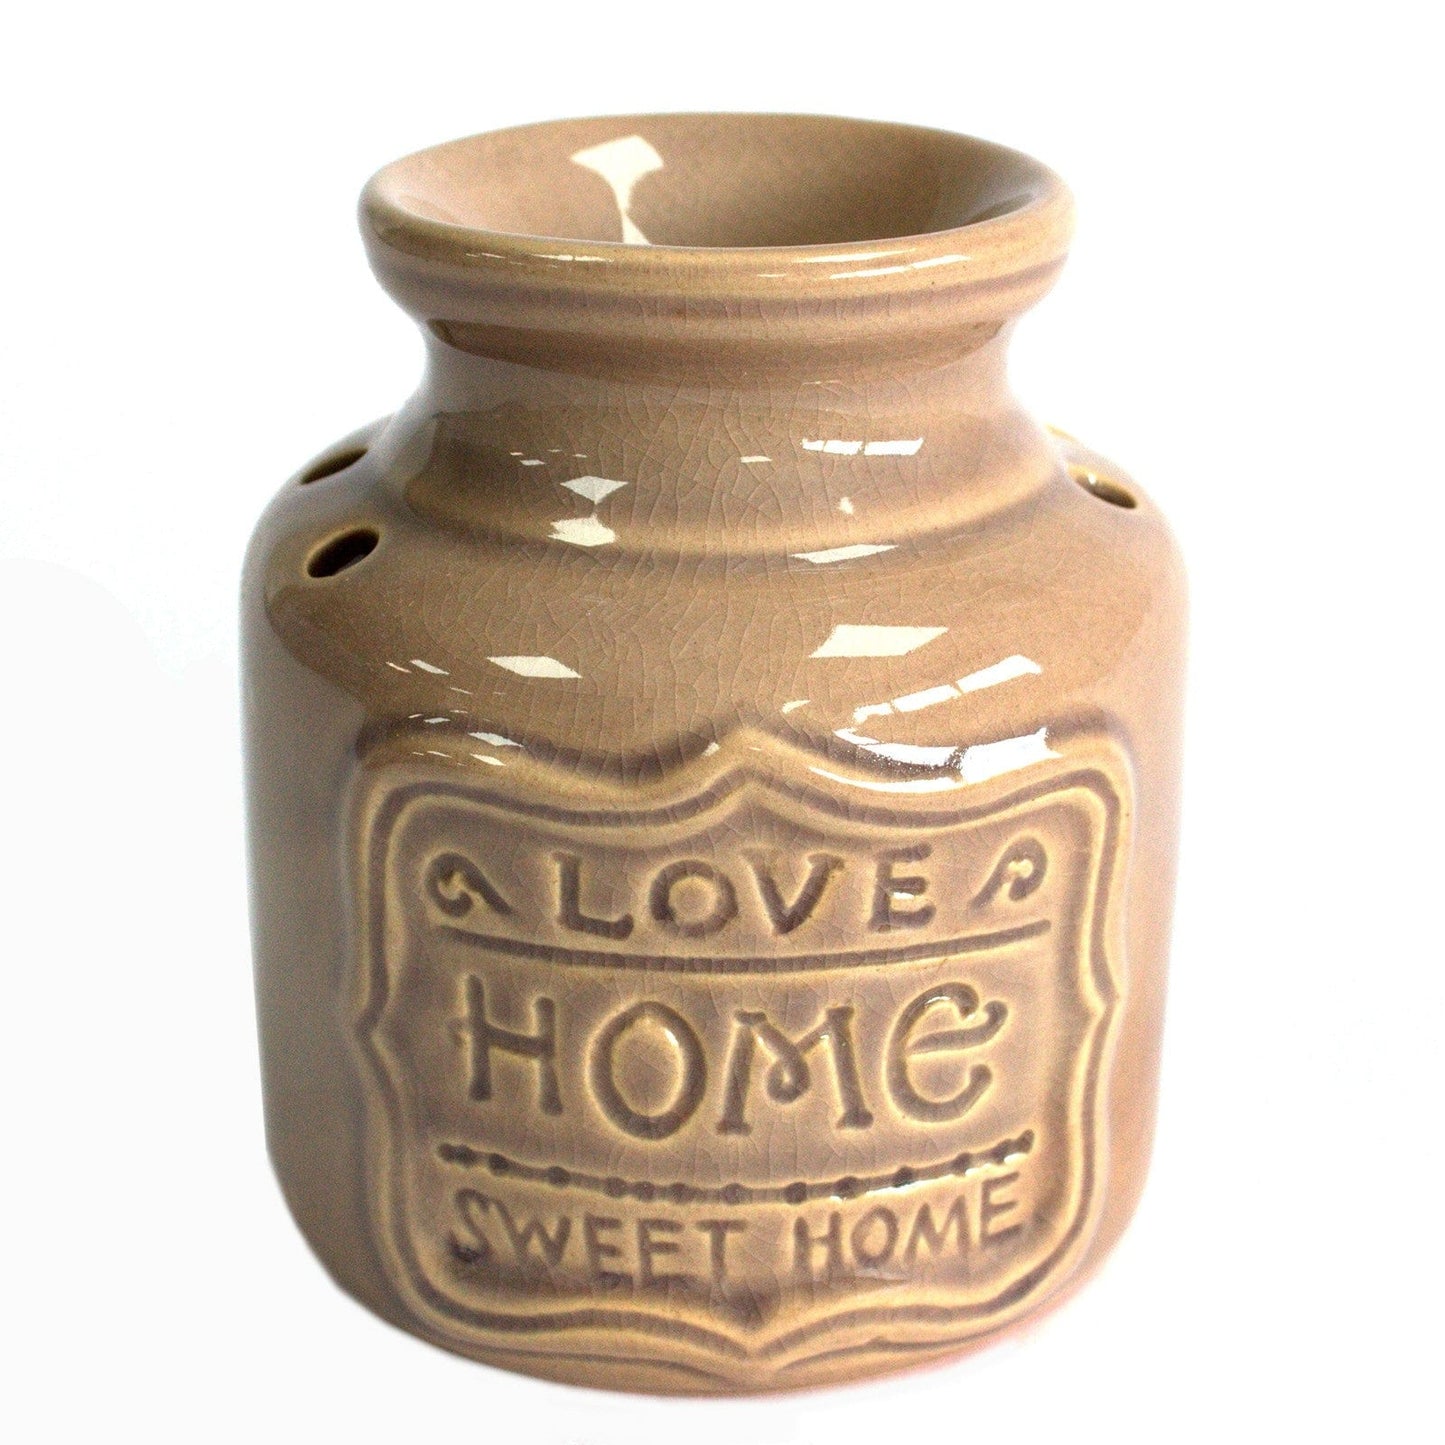 Lrg Home Oil Burner - Love Home Sweet Home - Kaftan direct